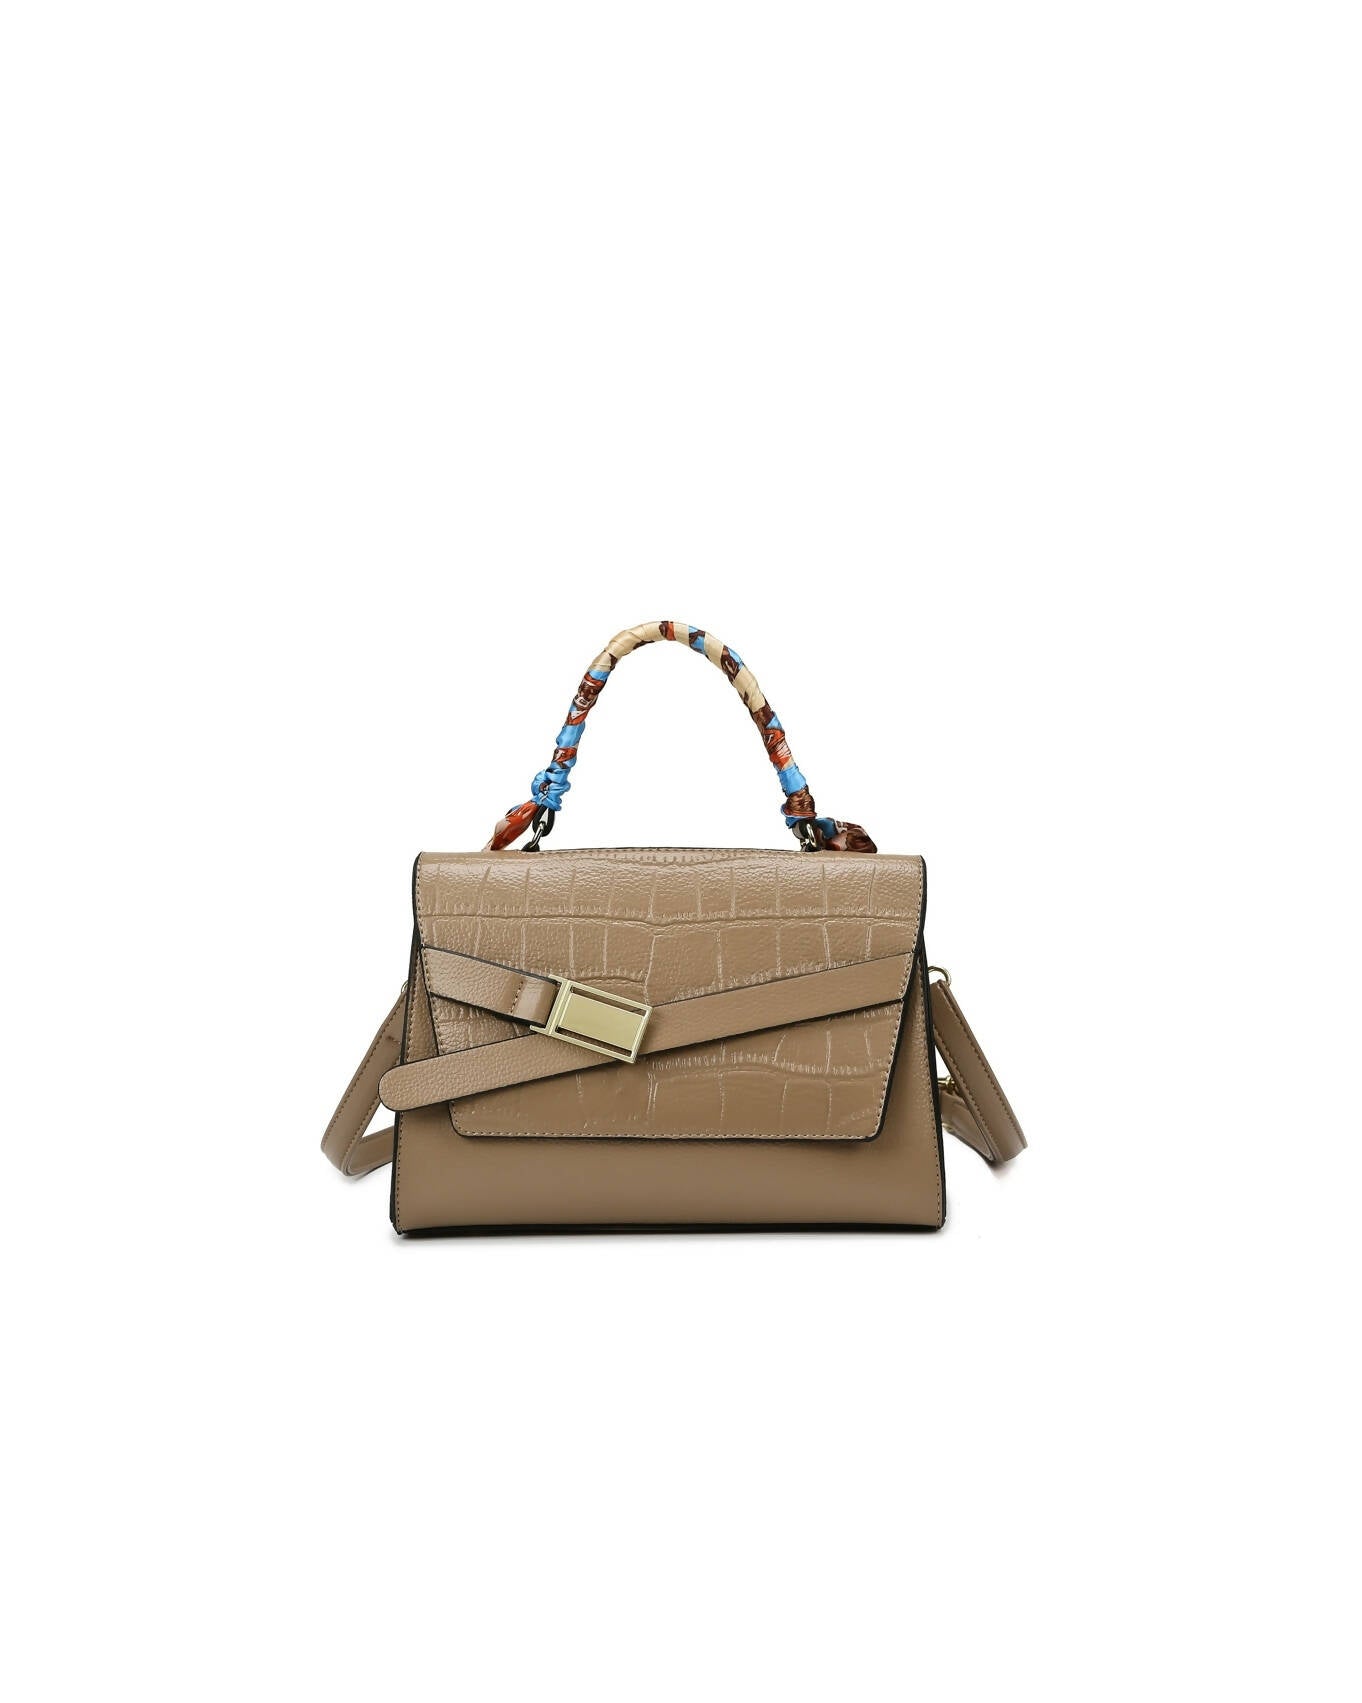 Slaks World Fashion Glamed Messanger Handbag - Brown